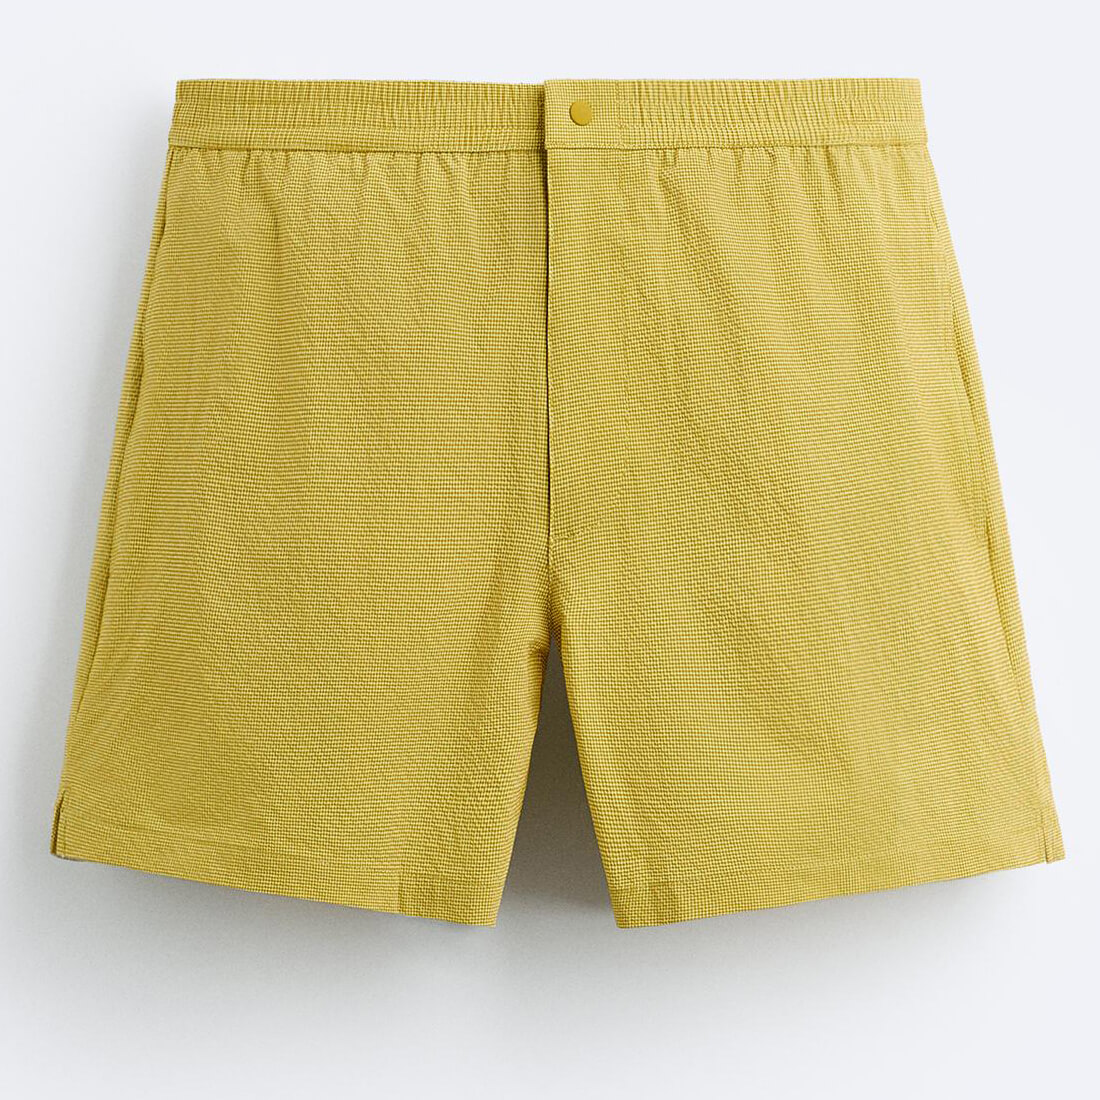 Плавательные шорты Zara Textured, желтый